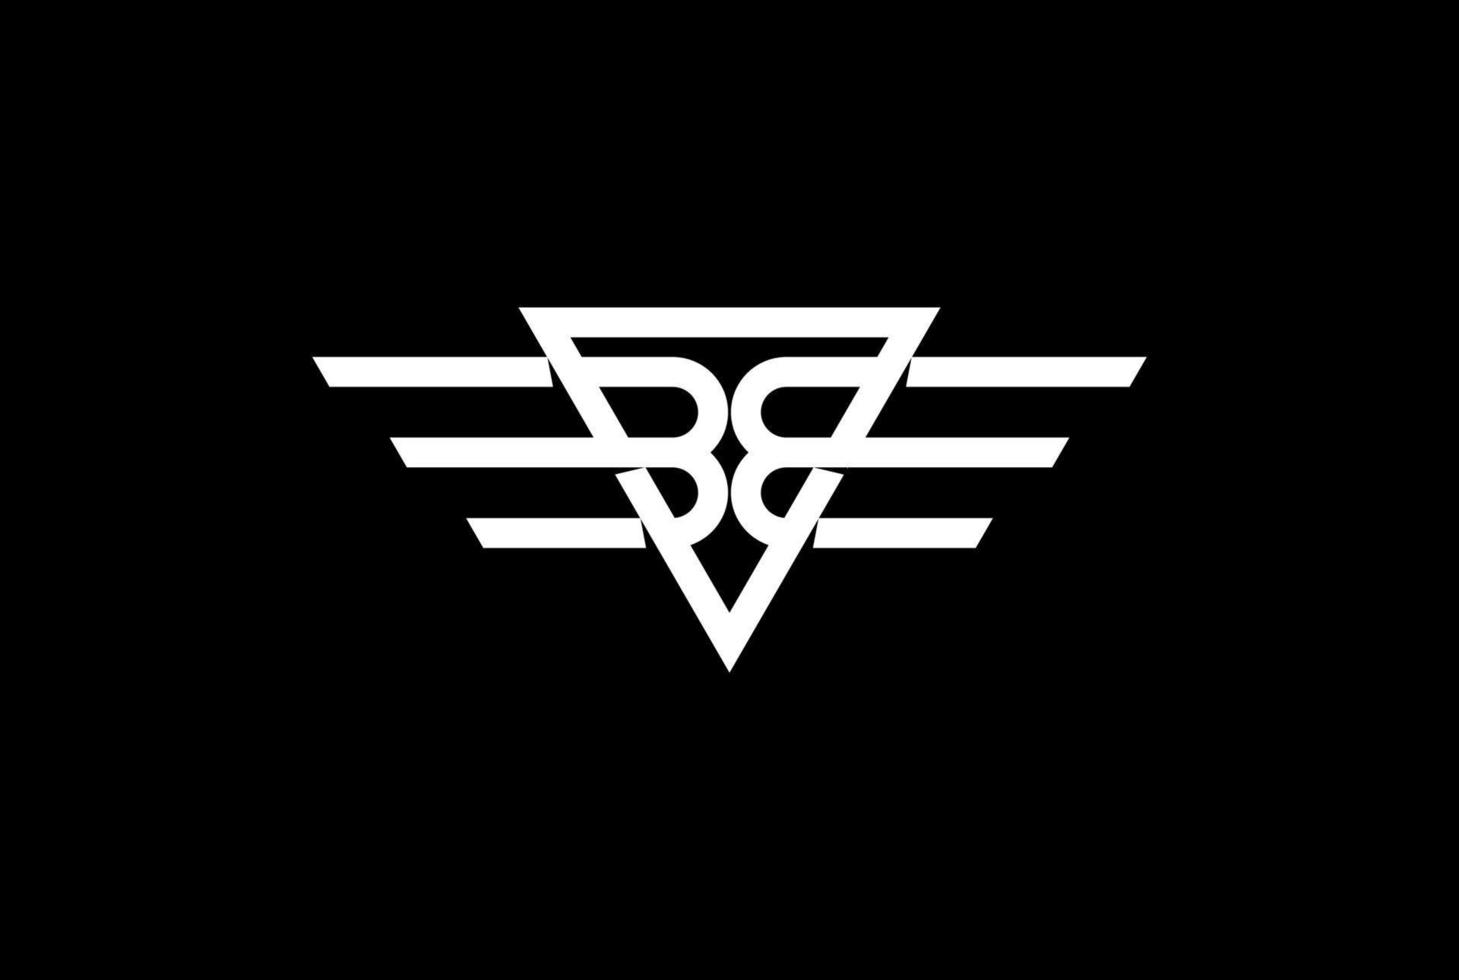 inicial bb 33 ou asas triangulares para vetor de design de logotipo de emblema militar esportivo